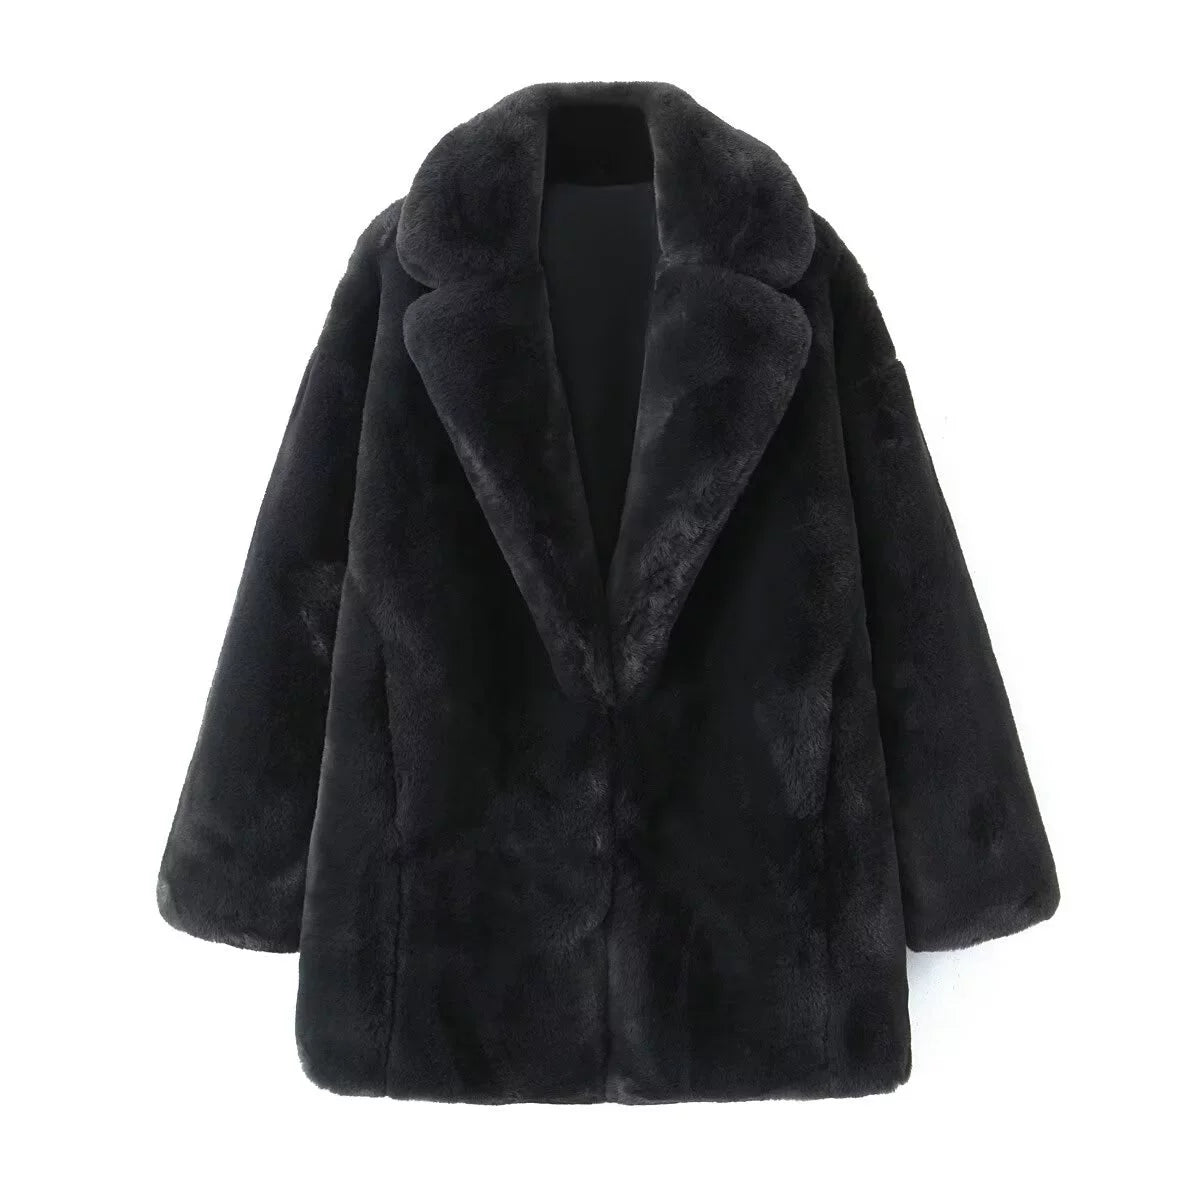 LaPose Fashion - Rayna Faux Fur Coat - Coats, Coats & Jackets, Fur Coats, Fur Jackets, Jackets, Long Coats, Oversize Jacket, Winter Clothes